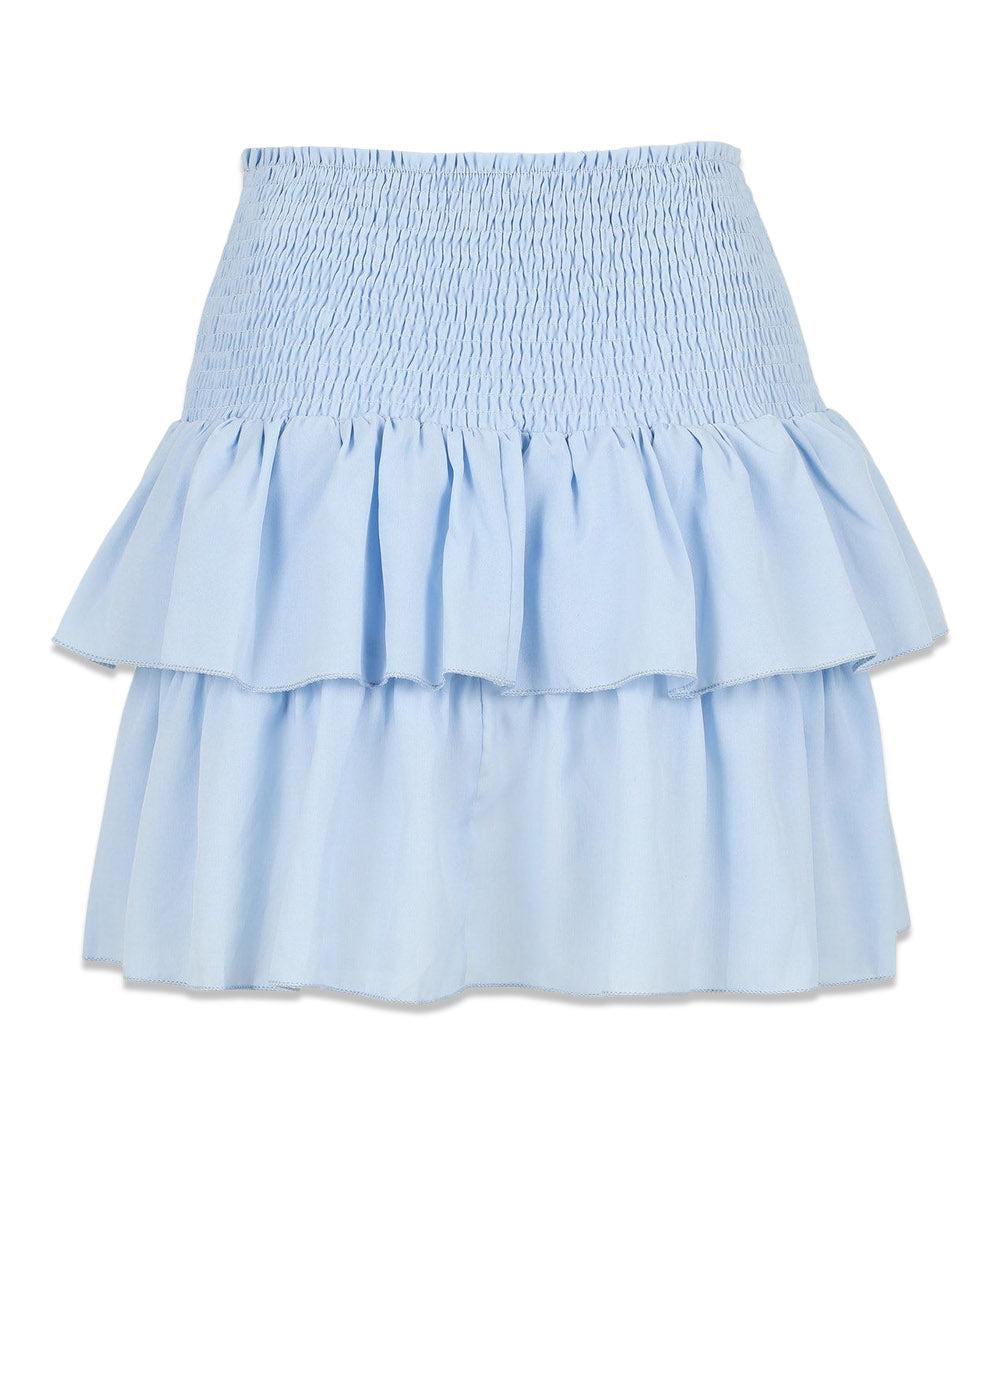 Carin R Skirt - Light Blue